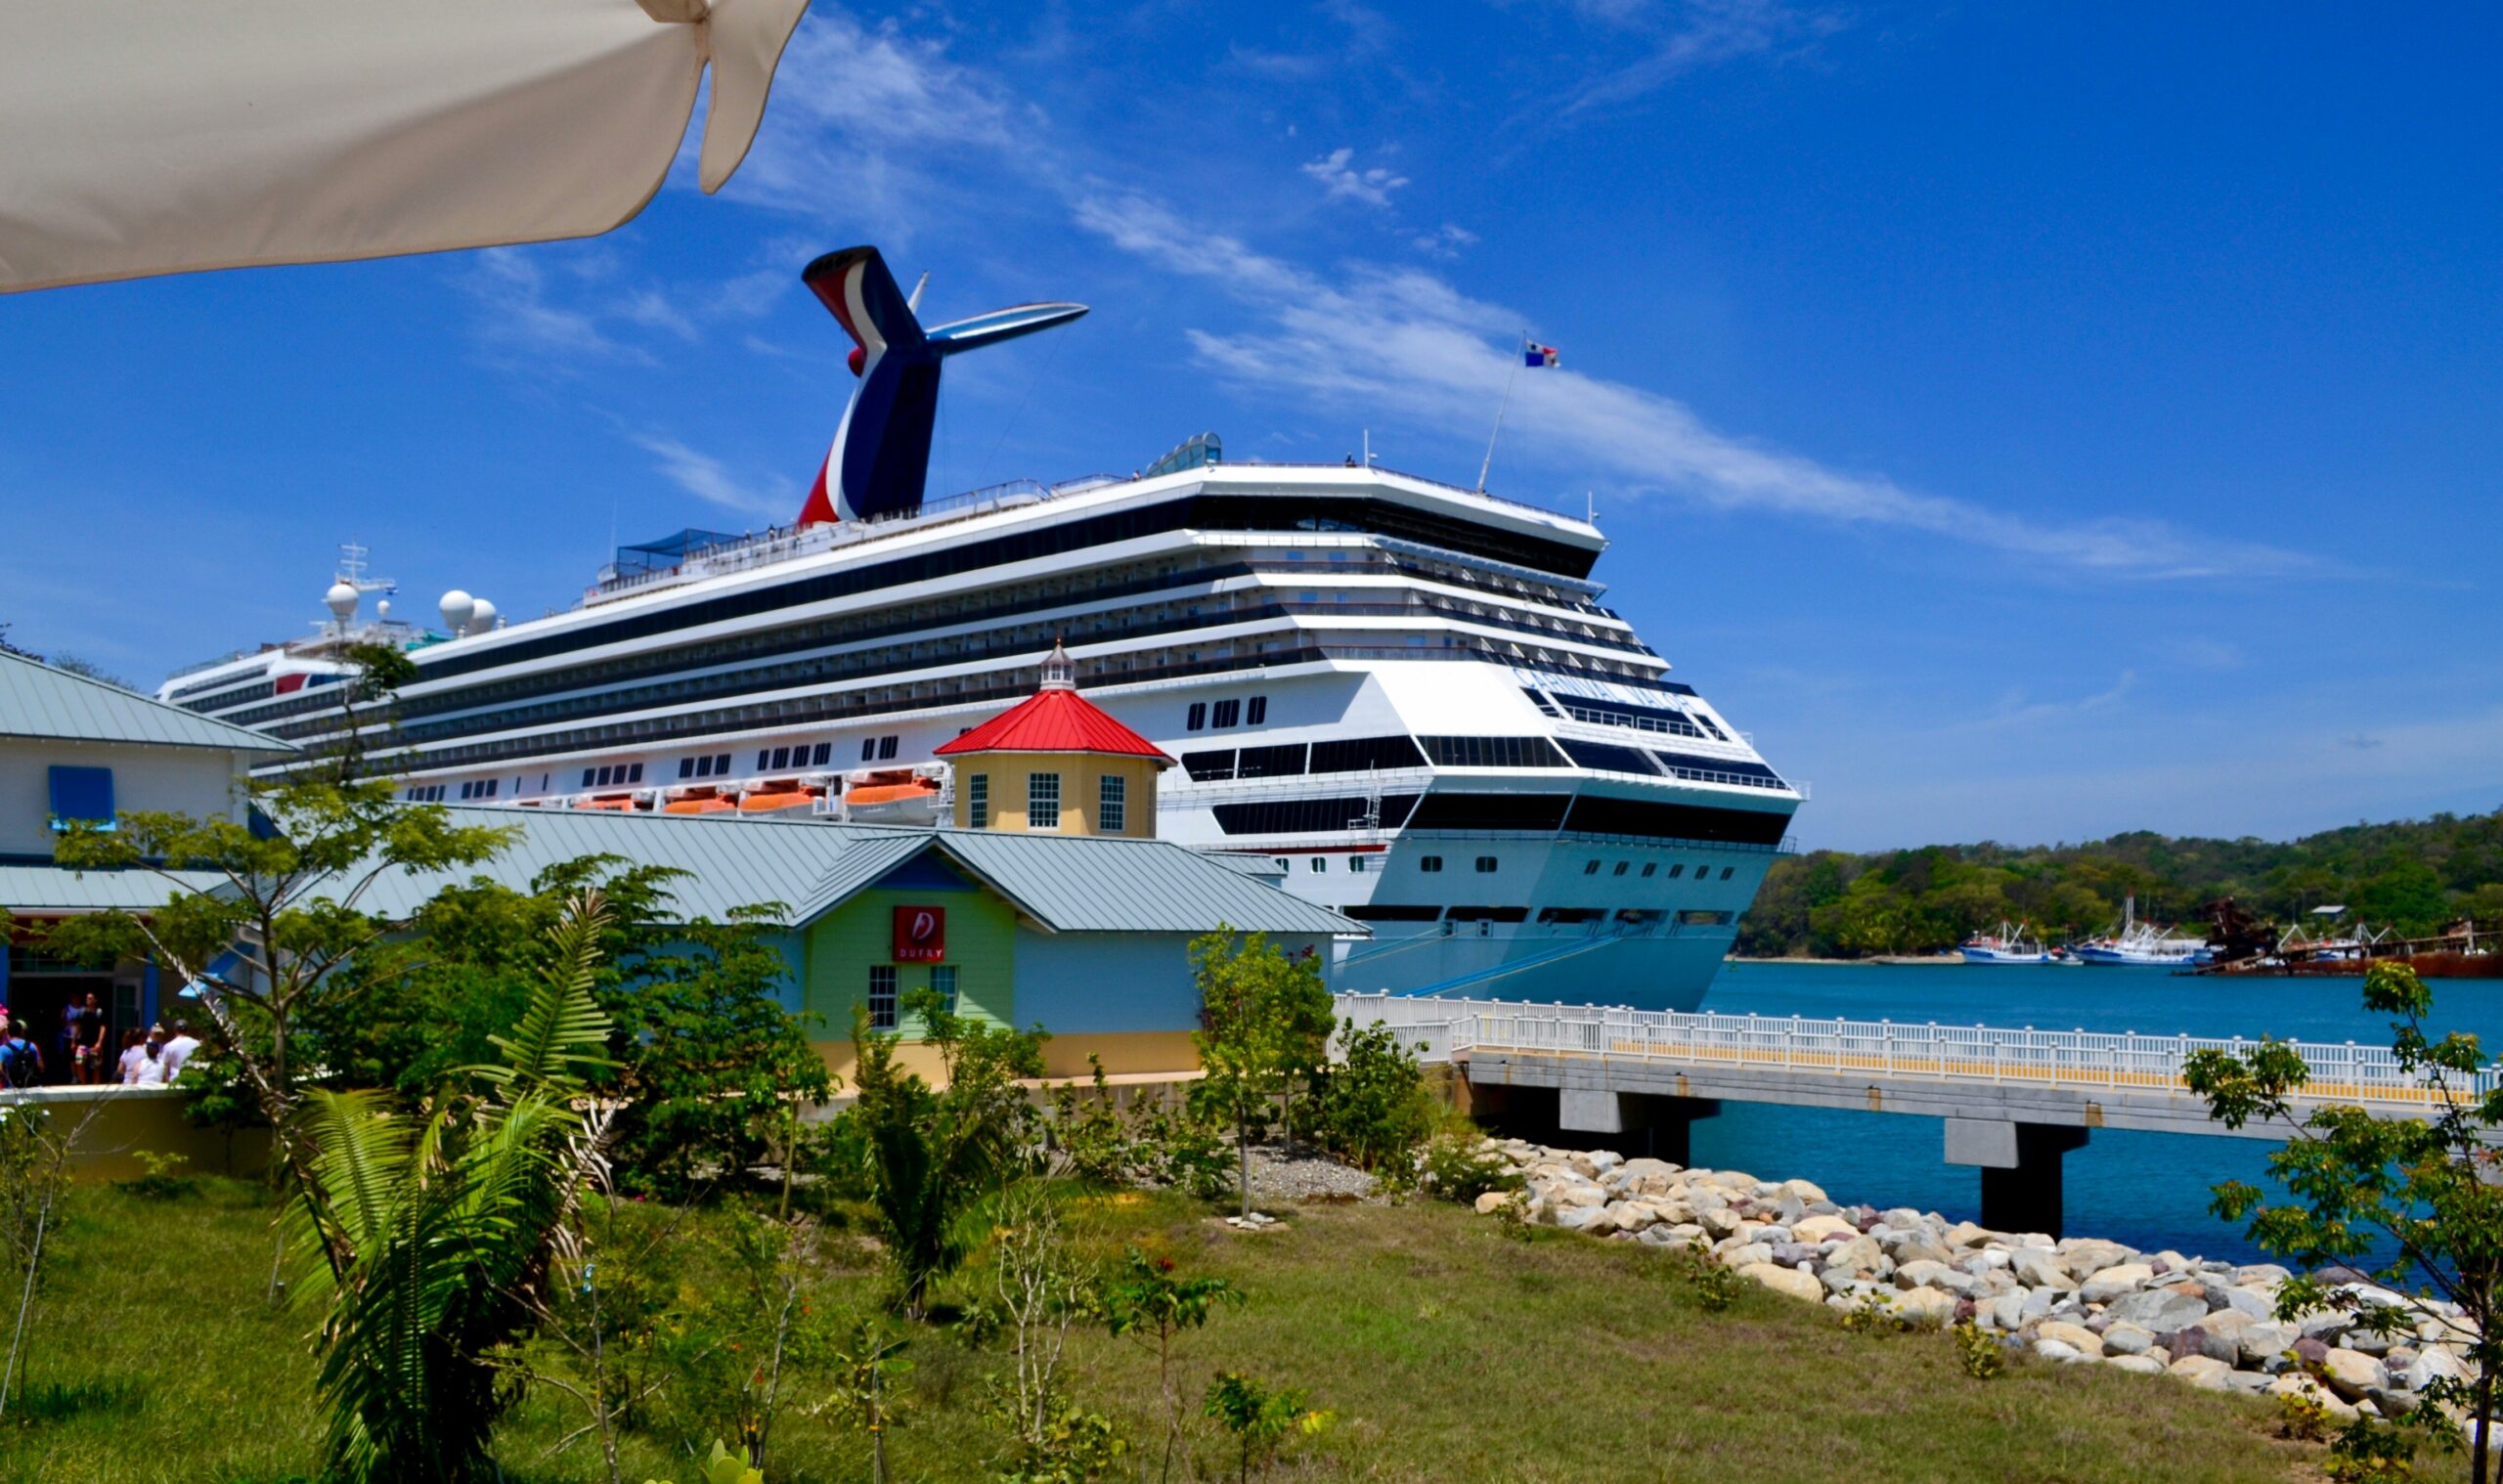 cruise ship arriving at the port of Roatan, Honduras. 